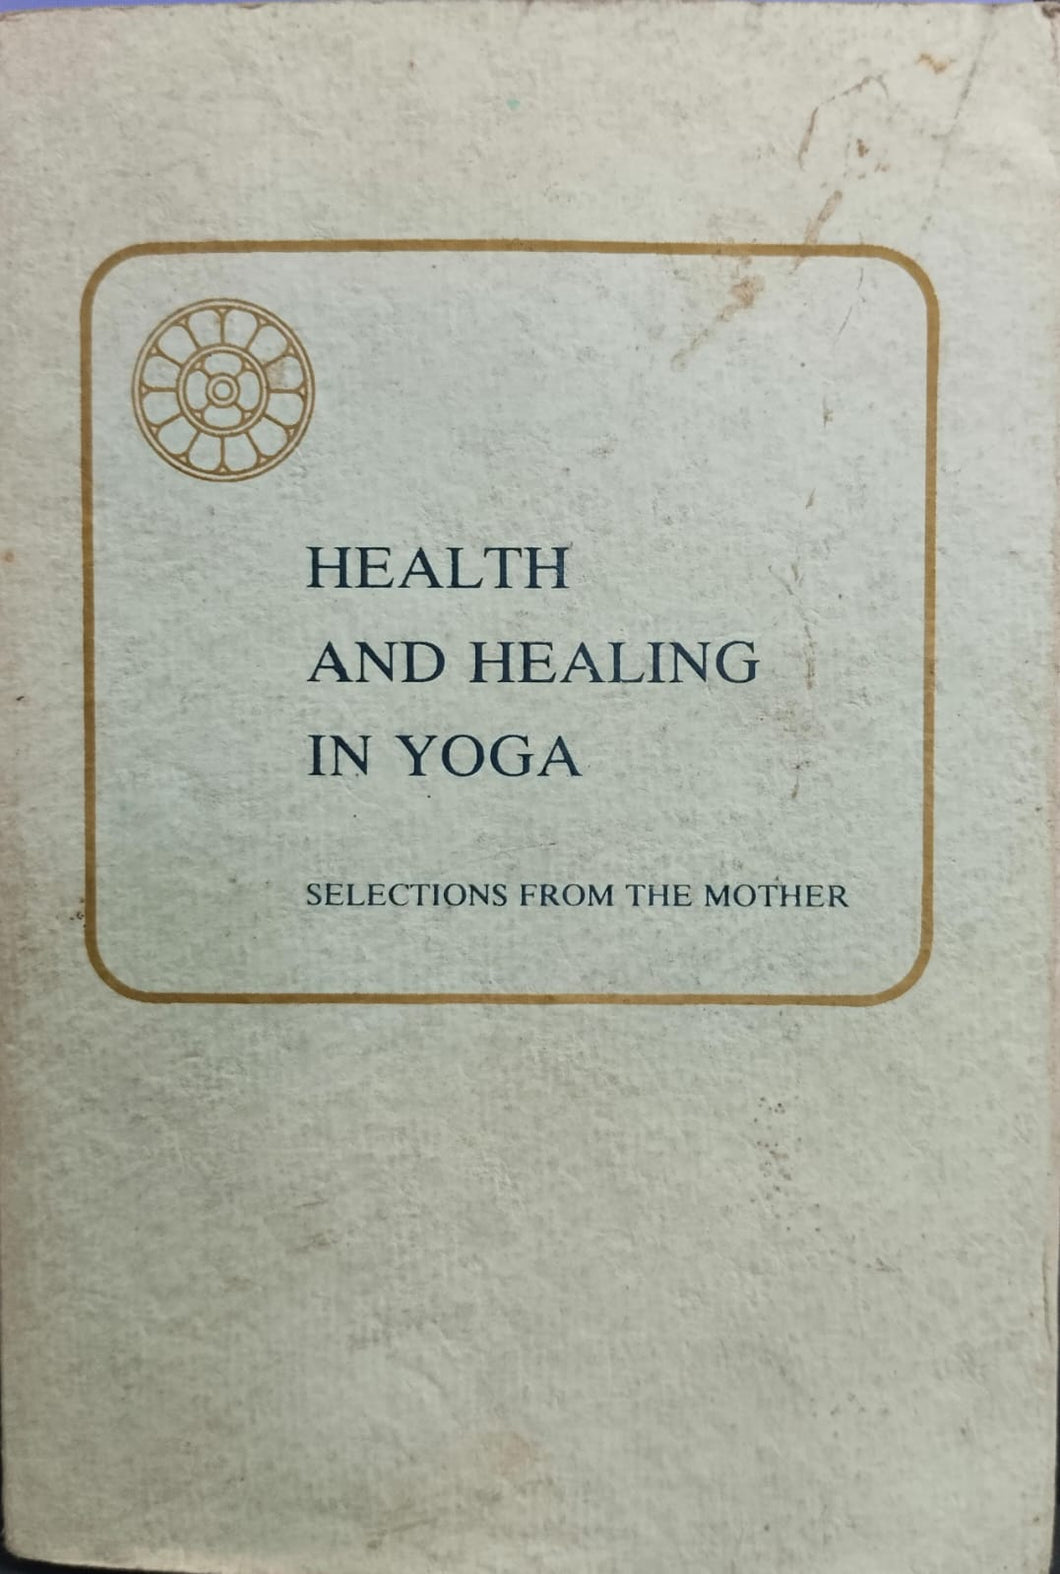 Health and healing in yoga